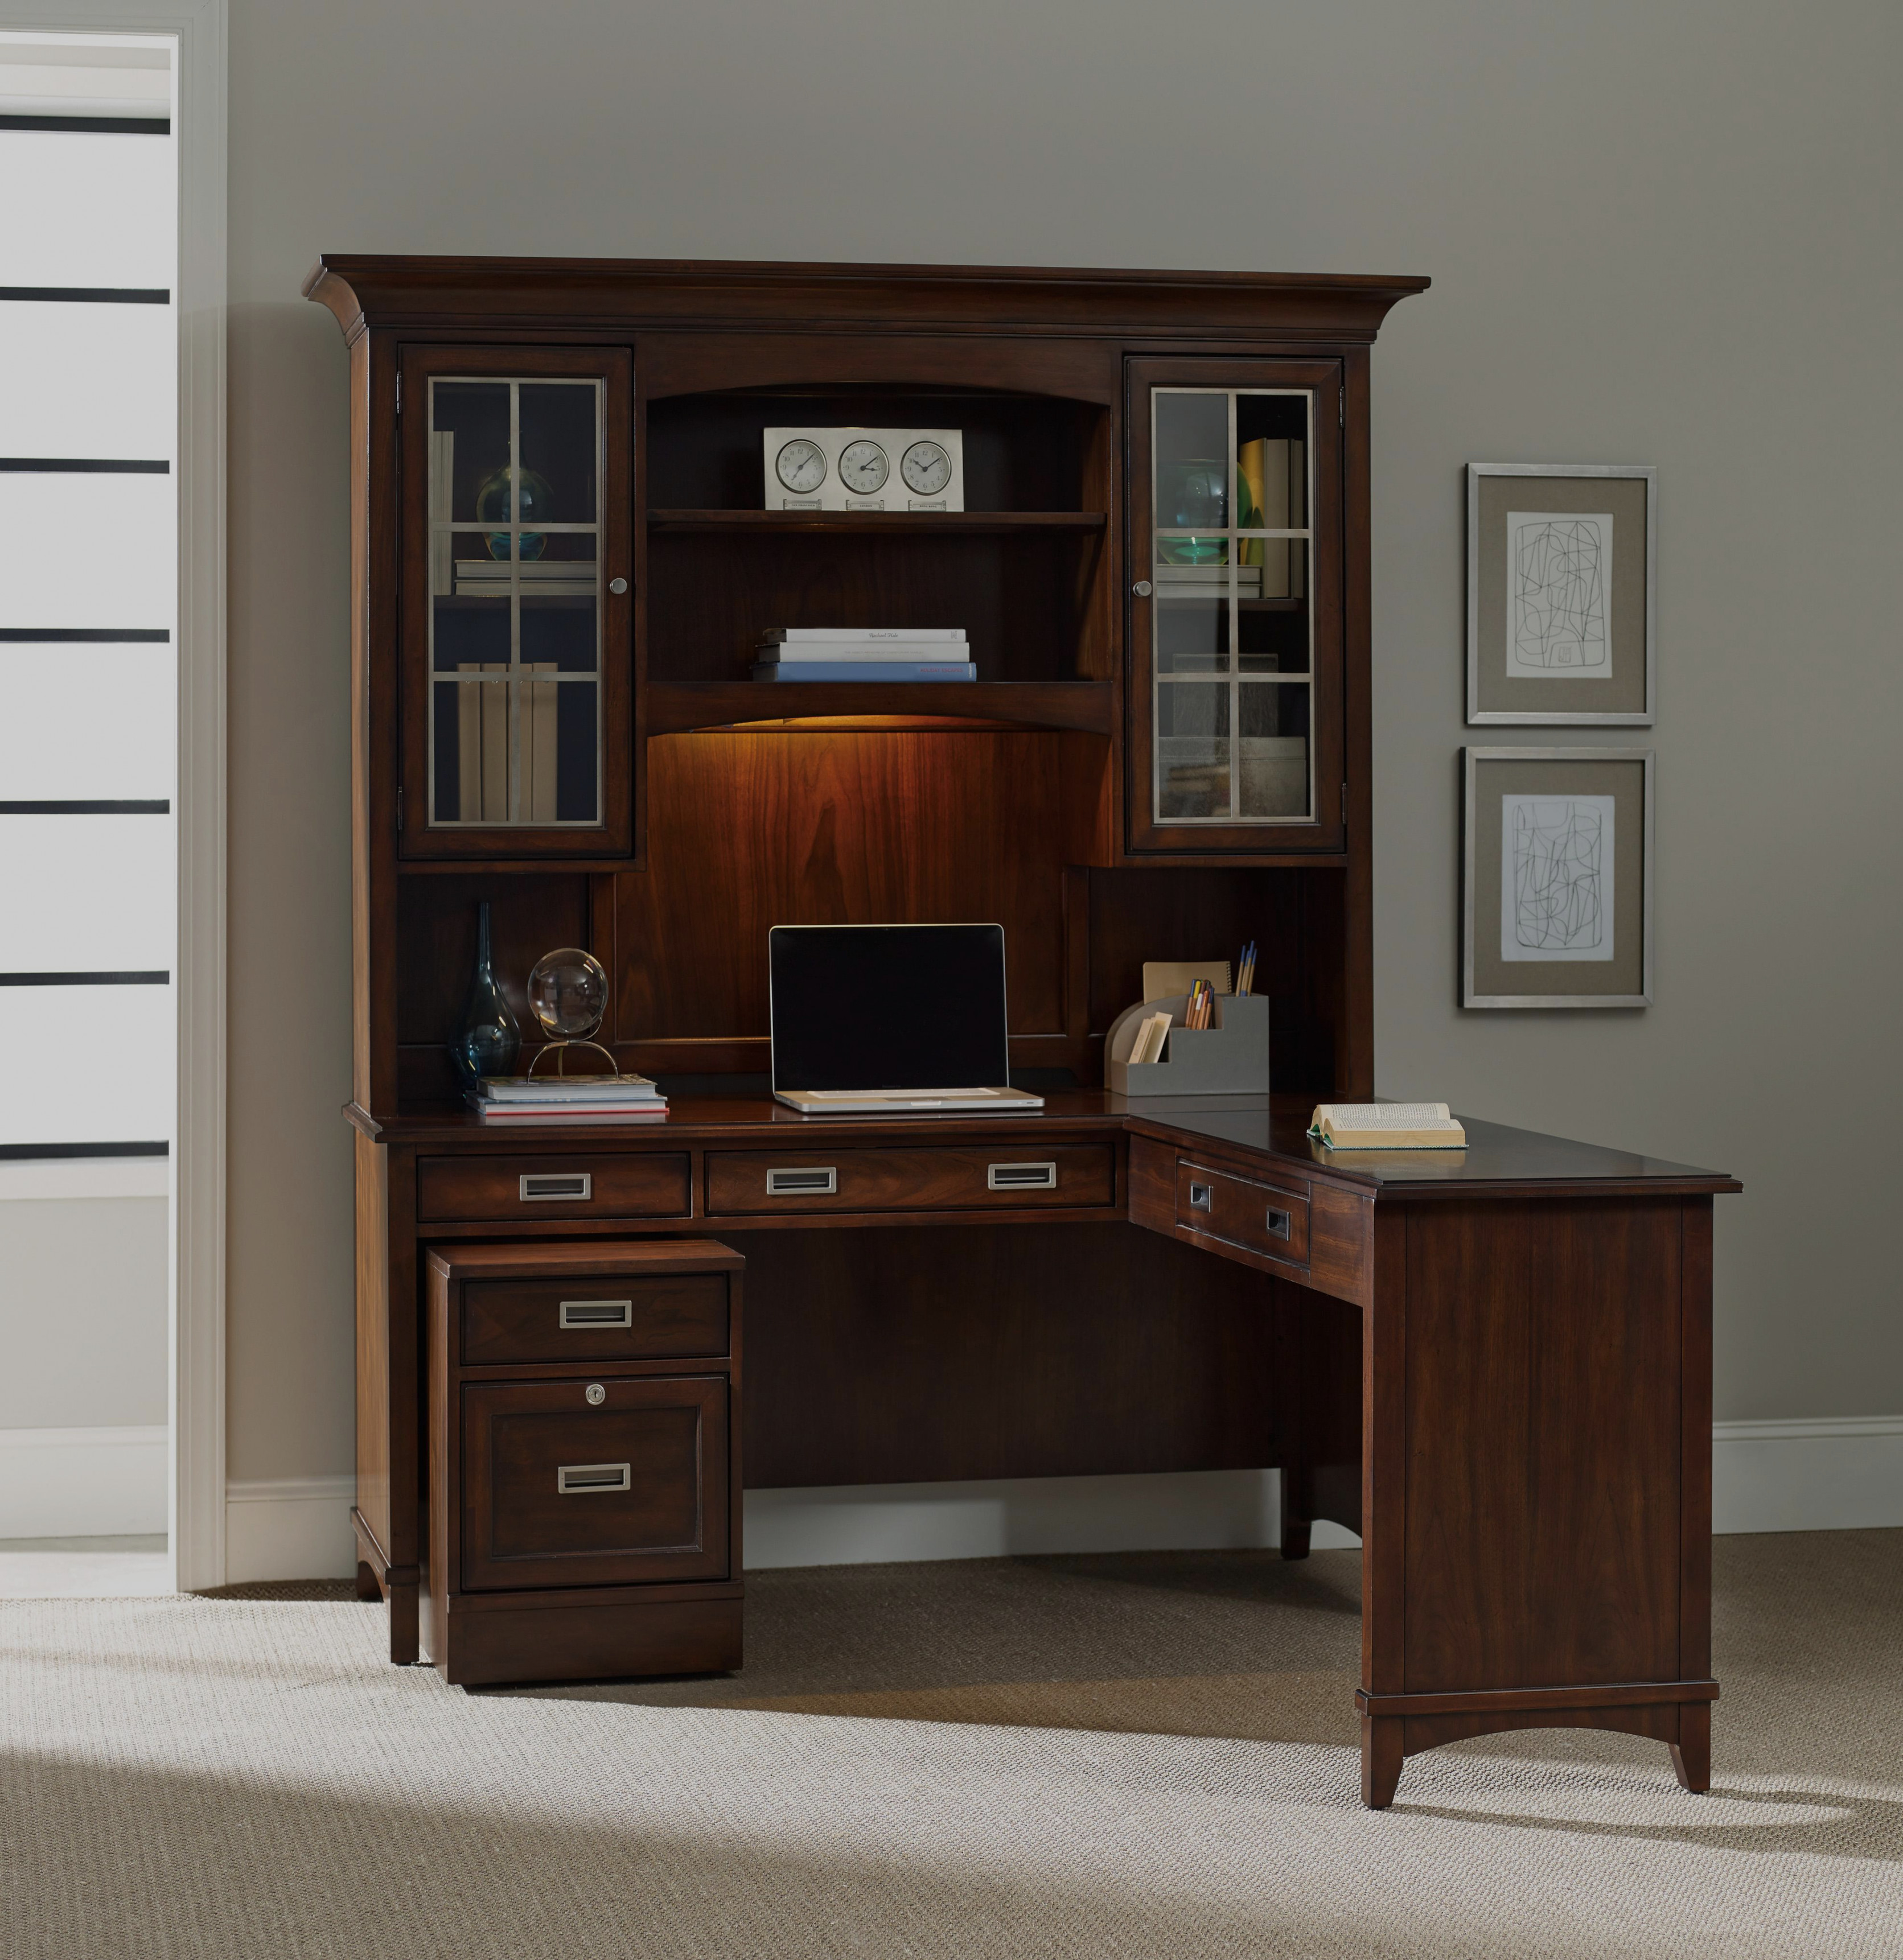 walnut filing cabinet best of 16 unique fice furniture file cabinets fresh home design ideas